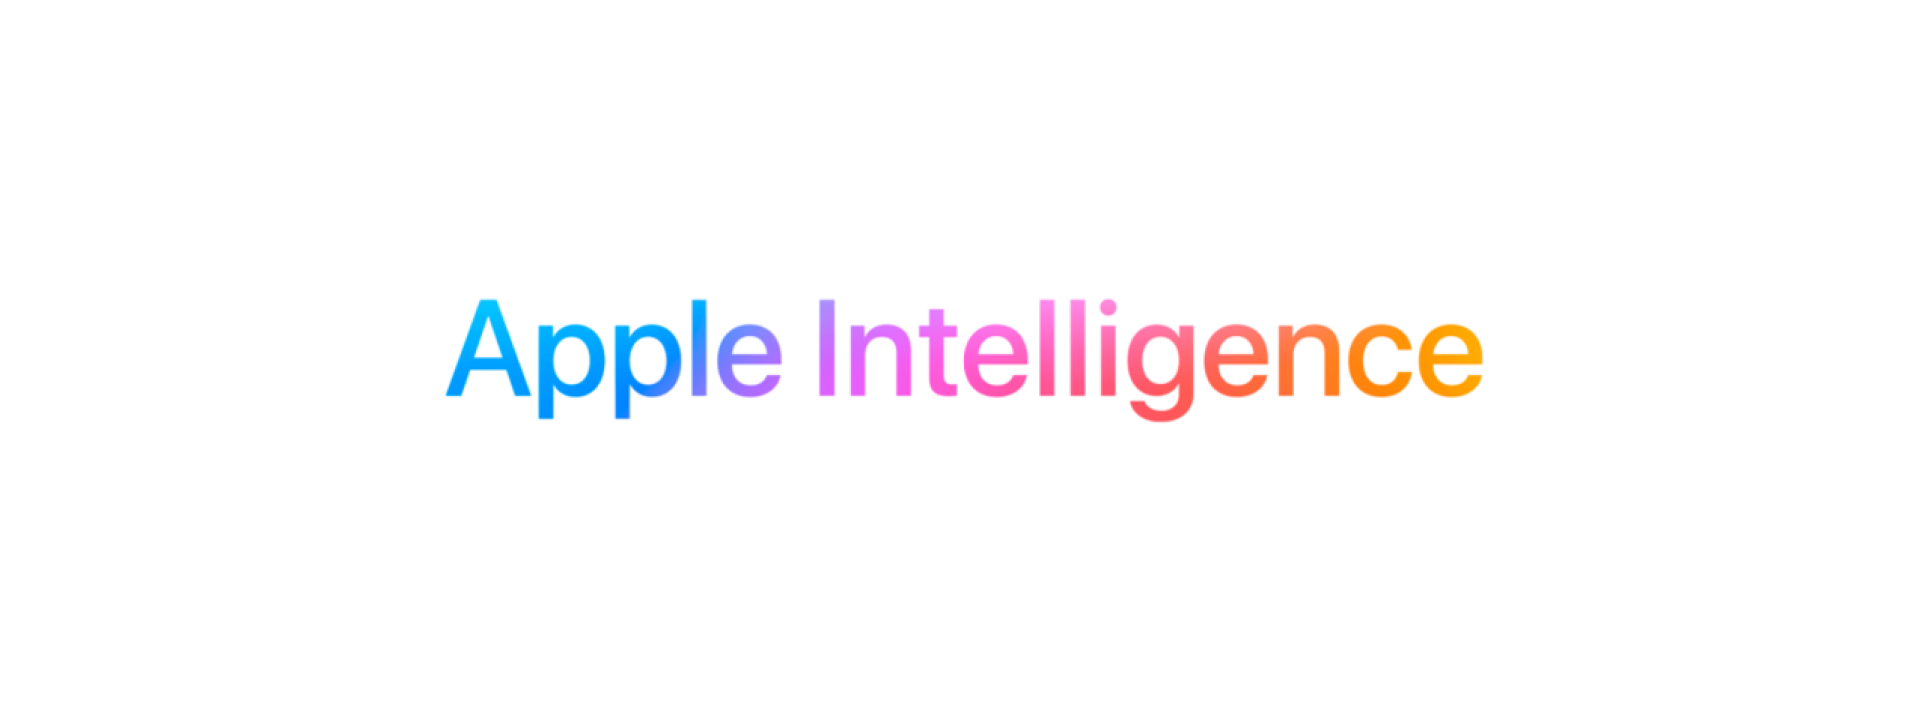 O que é a Apple Intelligence? blog post